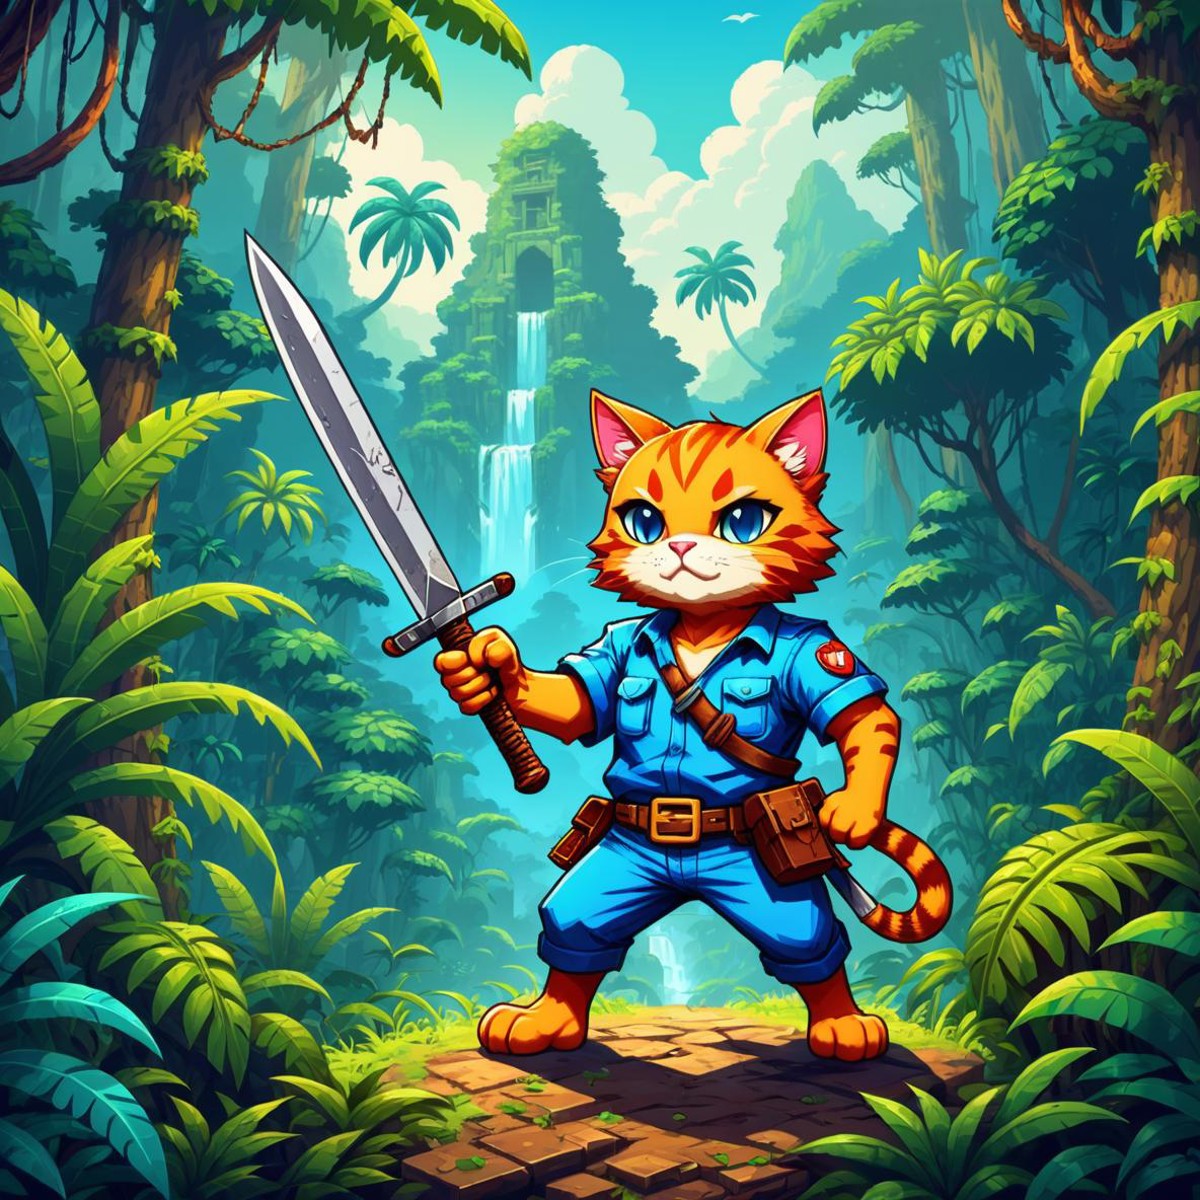 Retro game art anime style, adventurer cat, dense jungle, holding a machete . 16-bit, vibrant colors, pixelated, nostalgic...